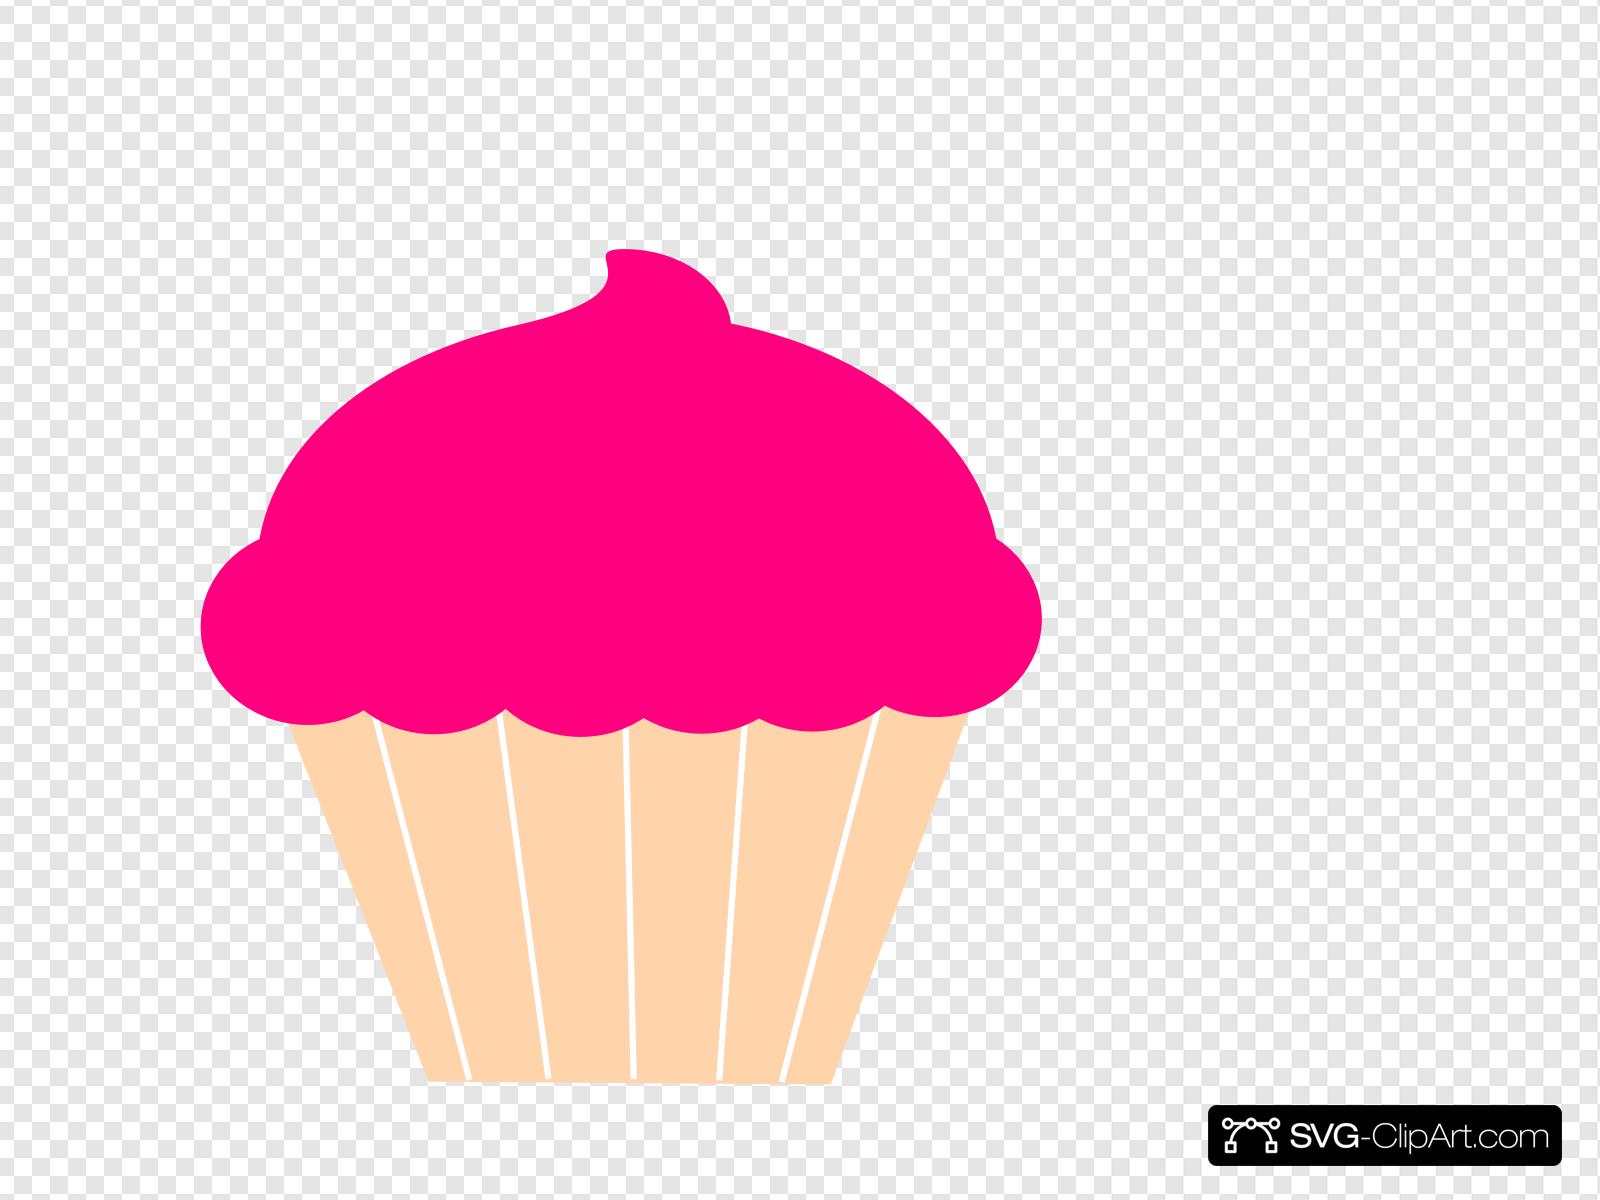 Cupcake Clip art, Icon and SVG